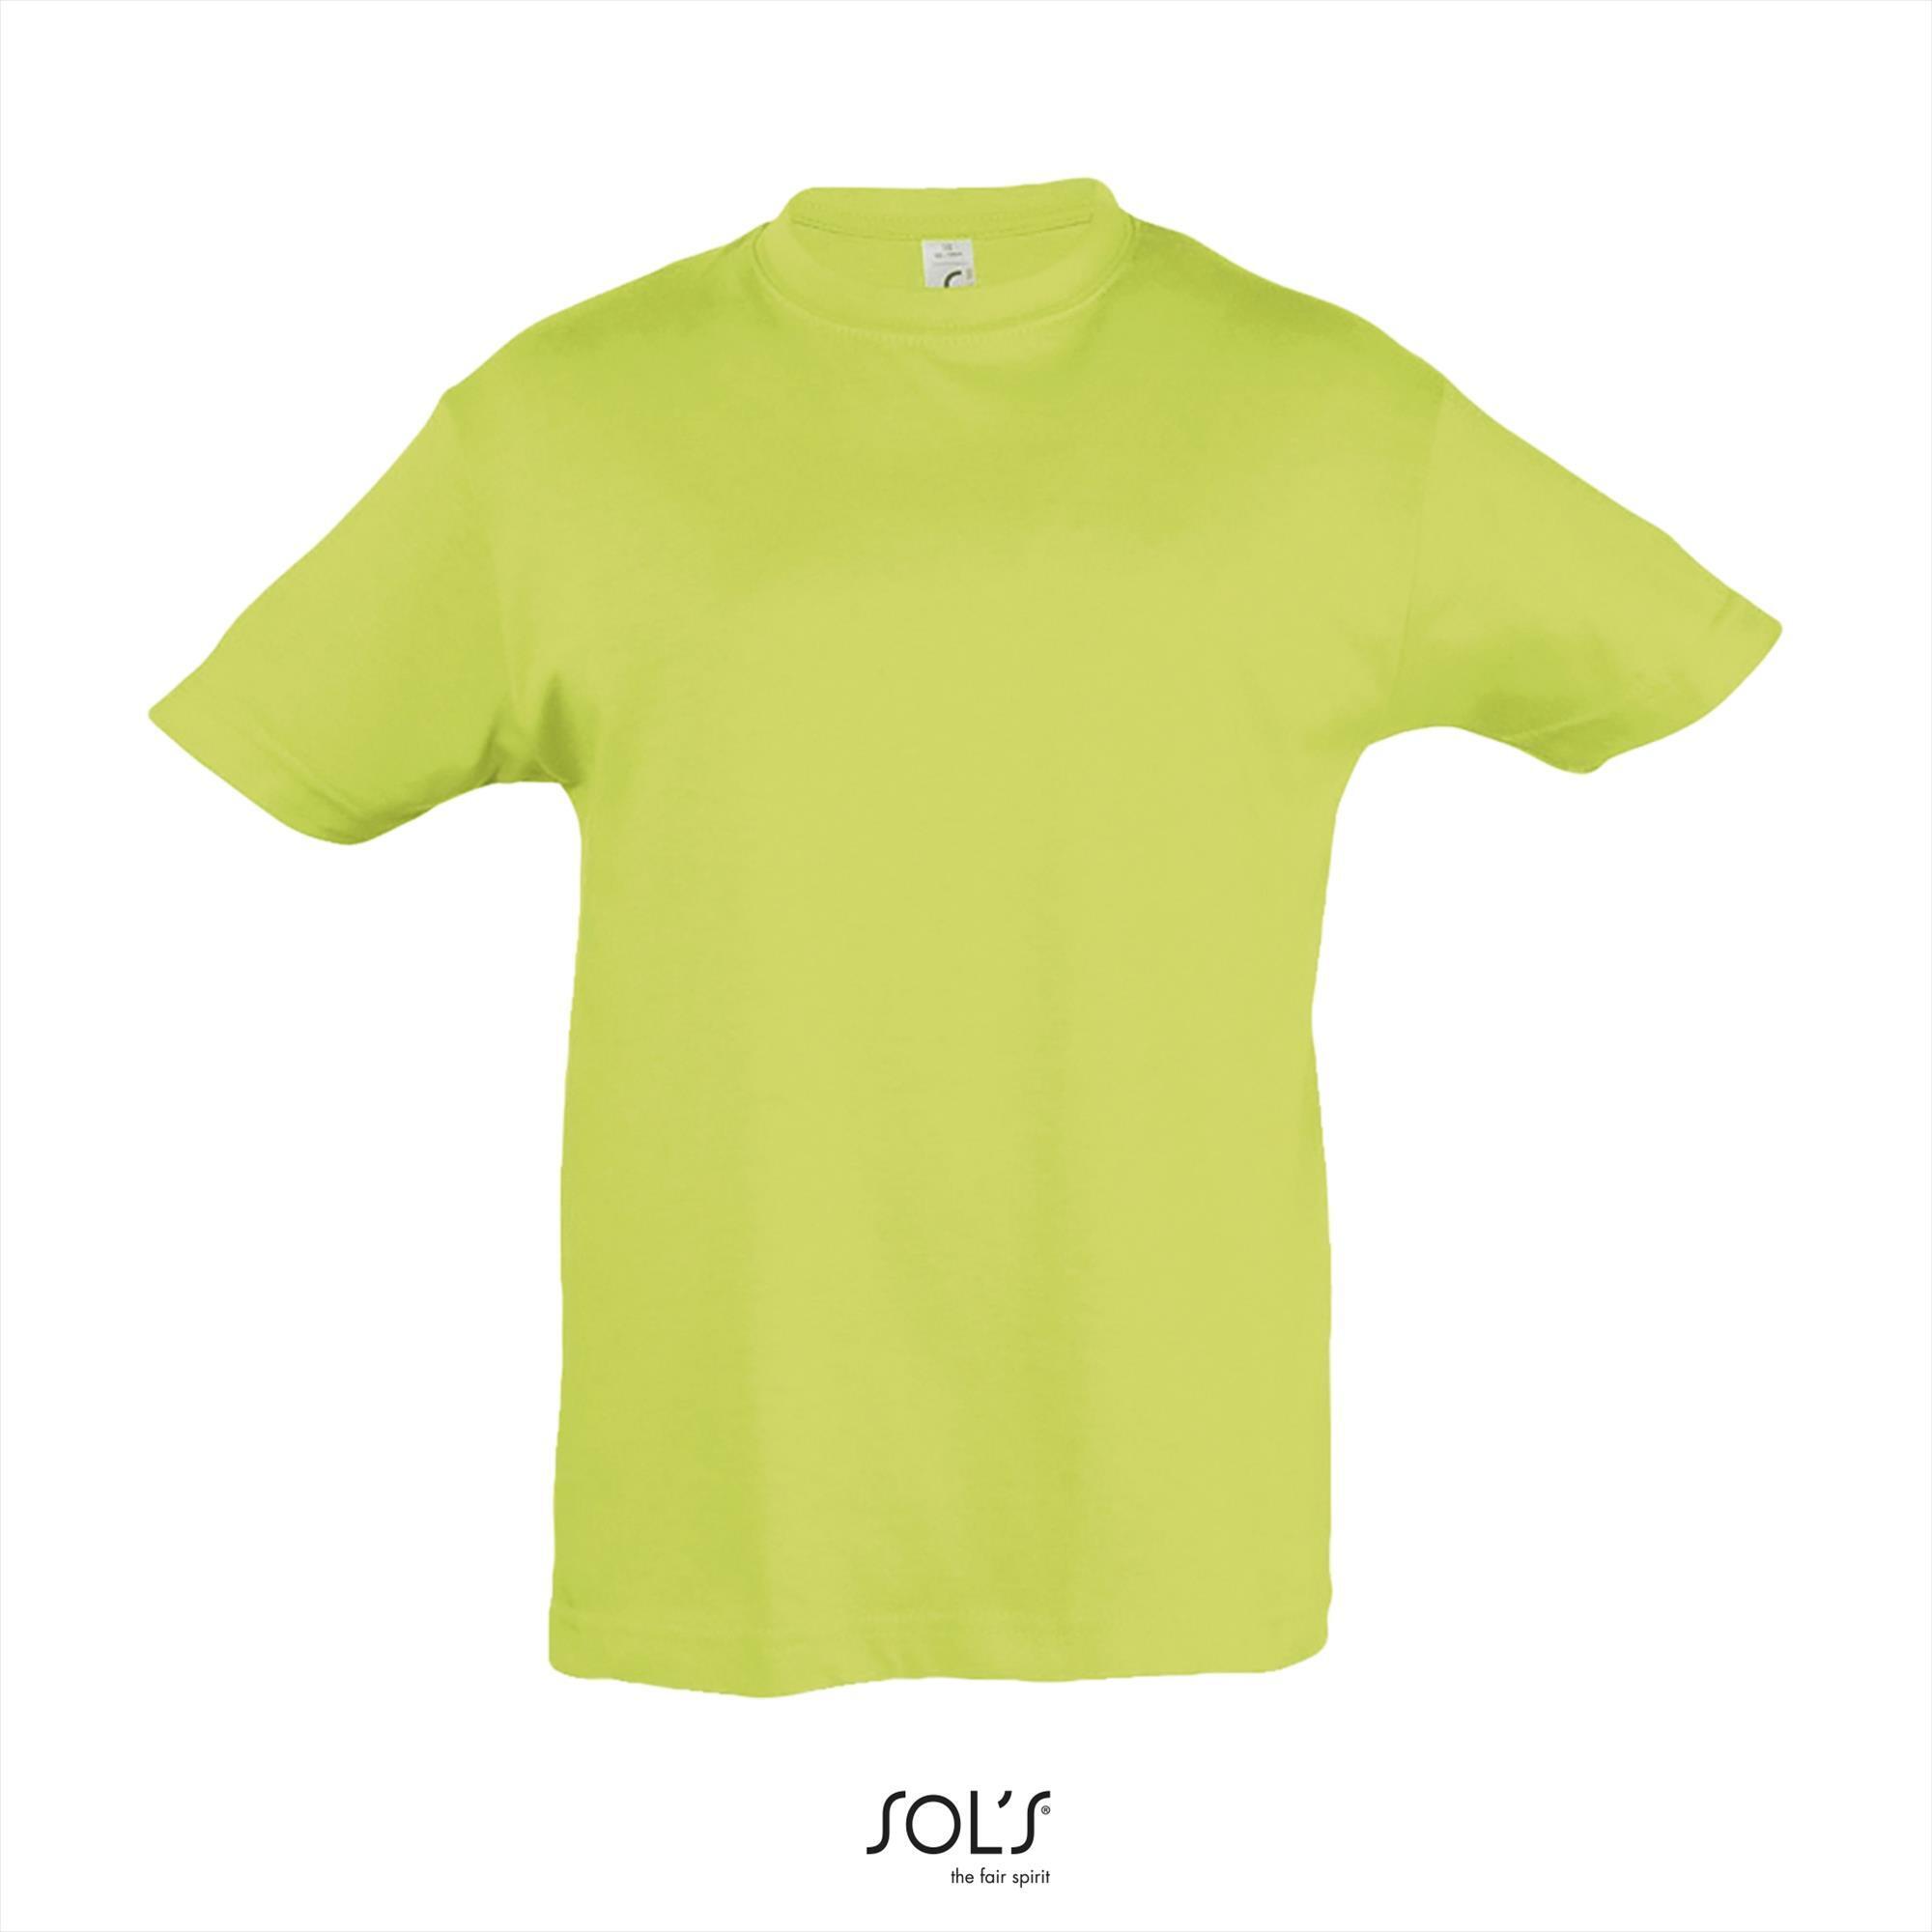 Klassiek kinder T-shirt appel groen